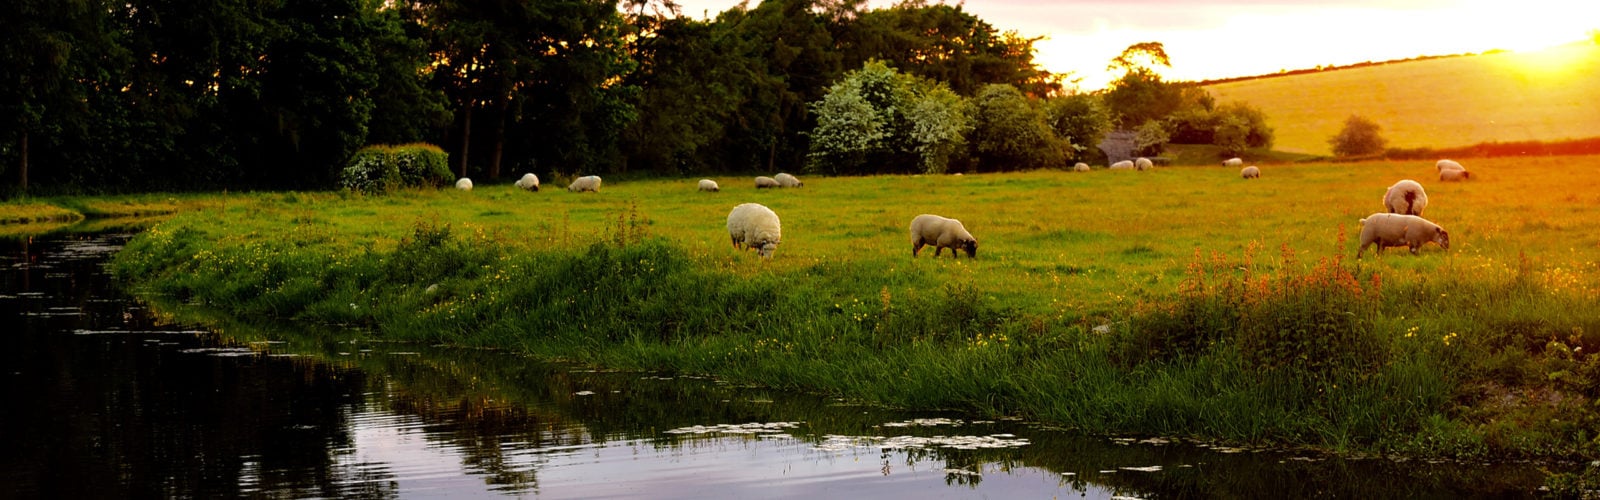 lake-district-sheep